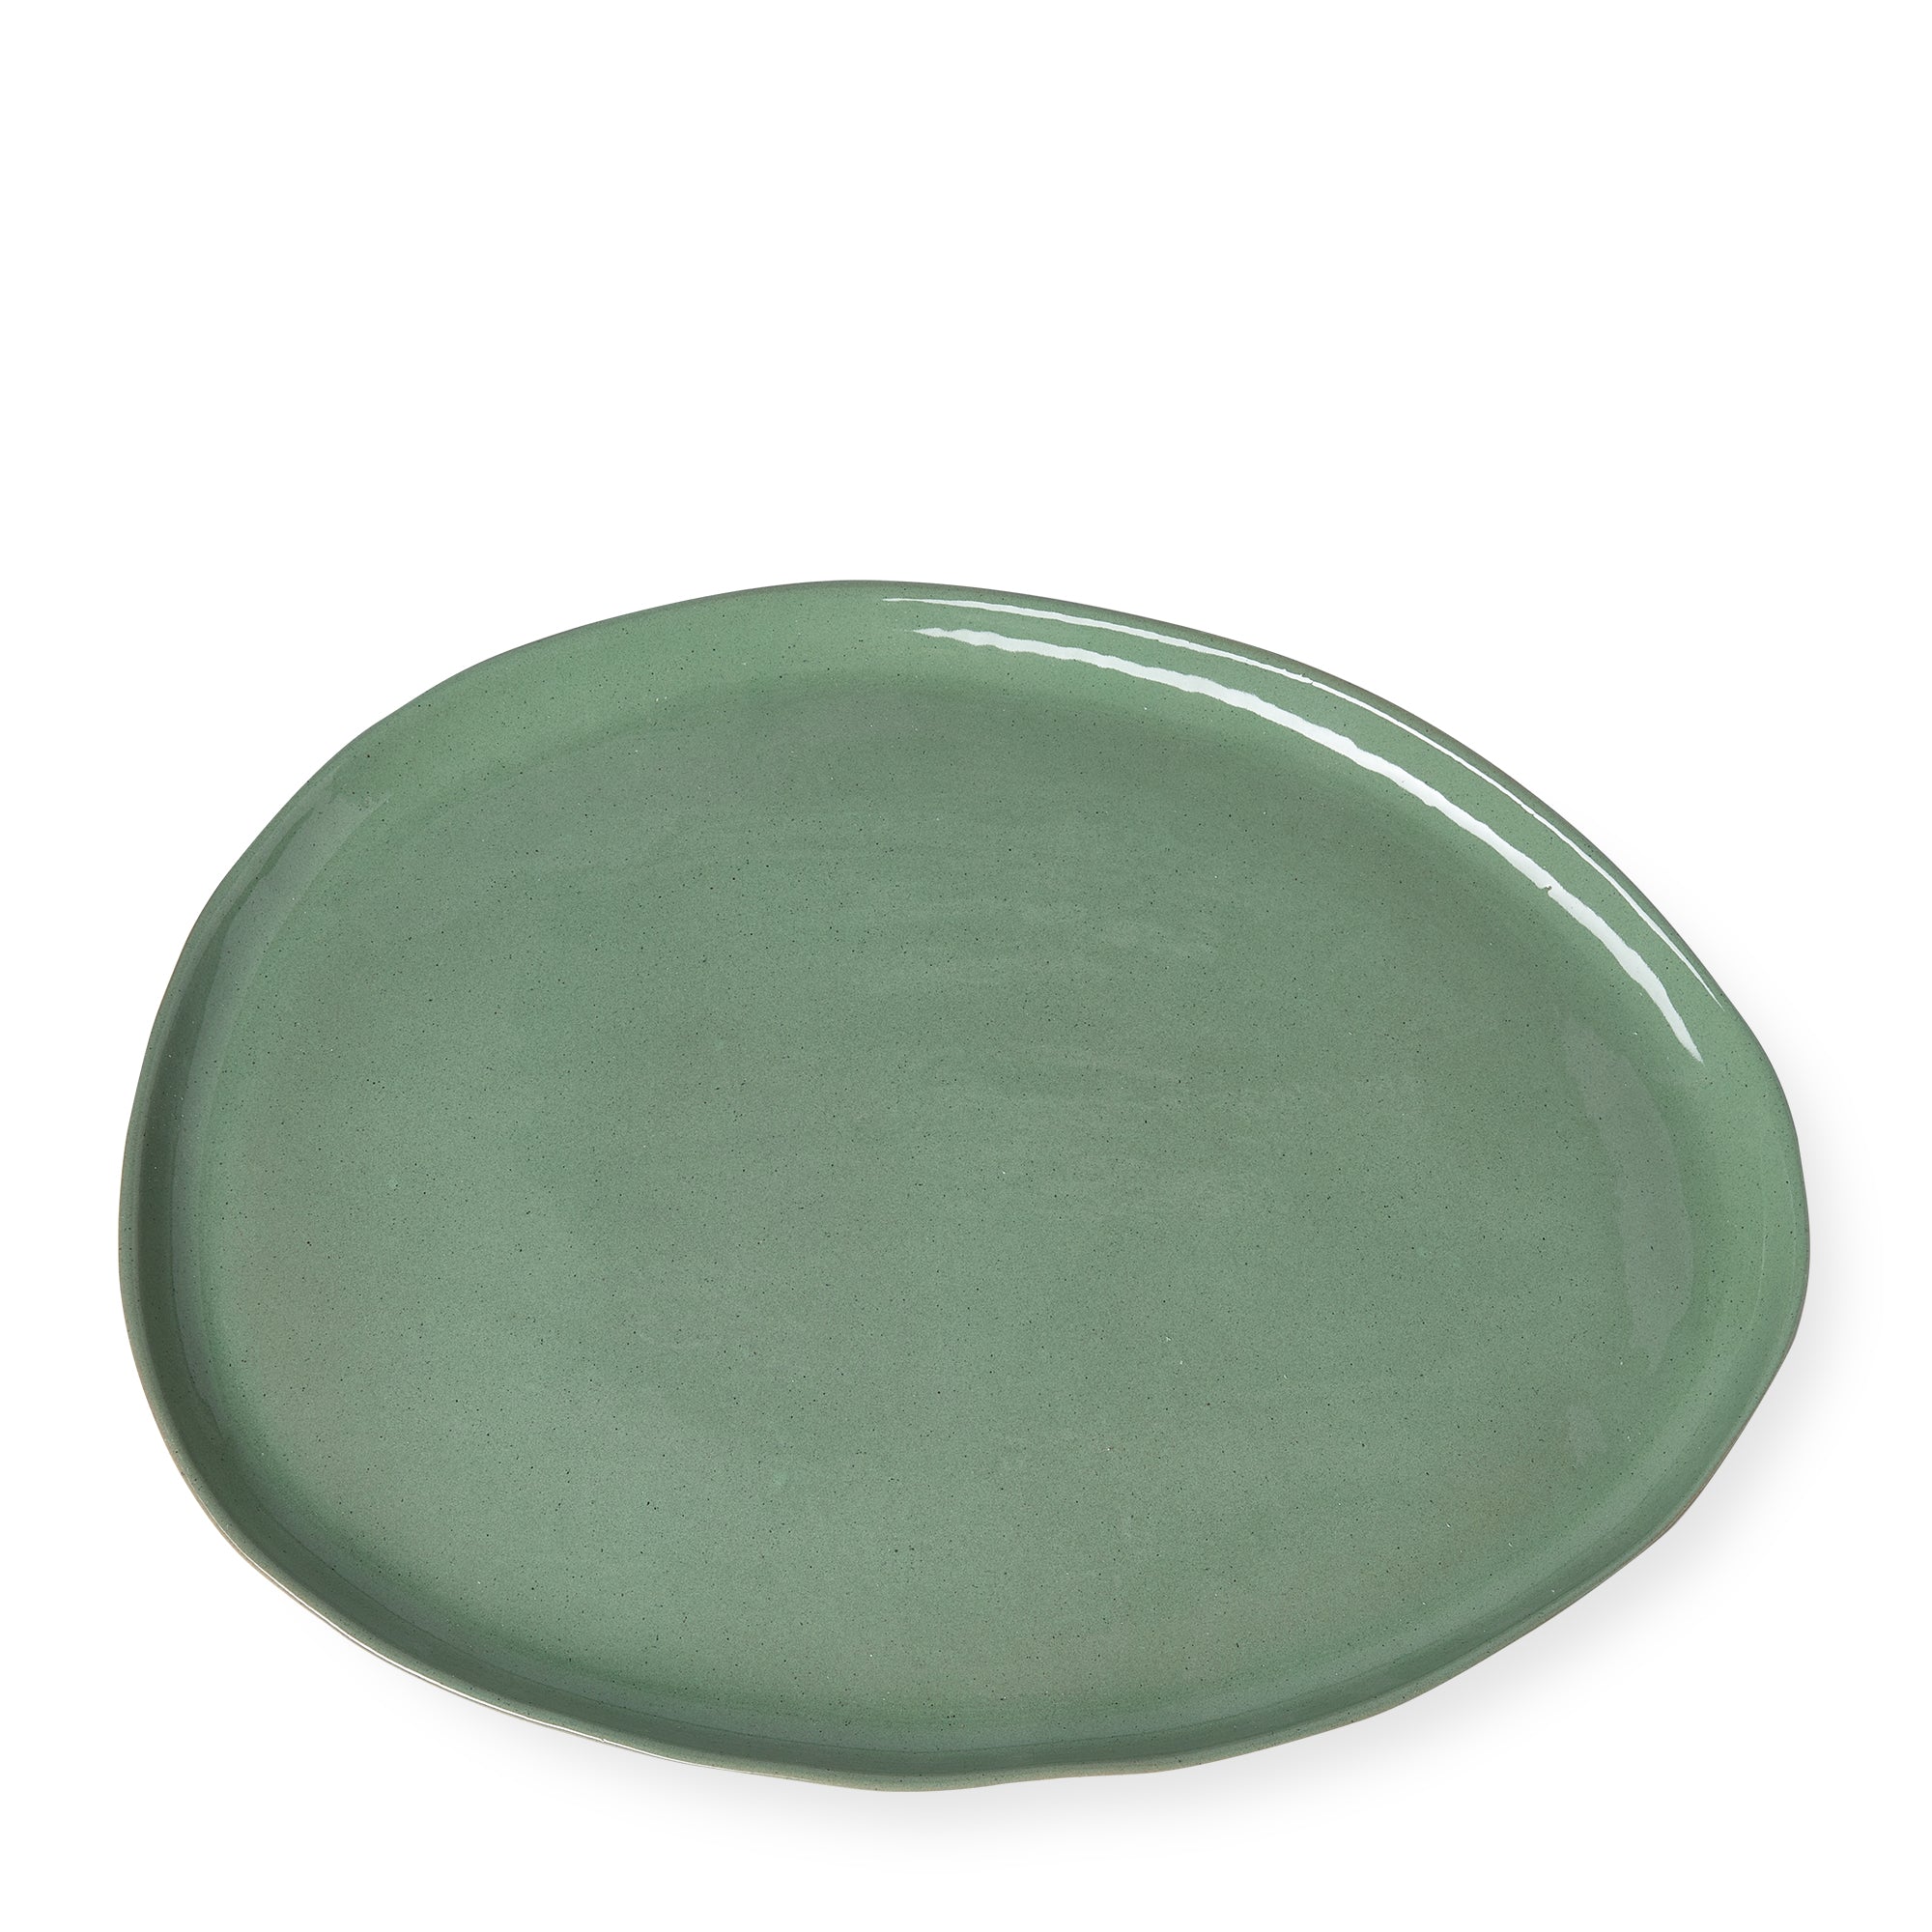 Image of New Nostalgia Oversized Round Serving Platter Olive 50cm